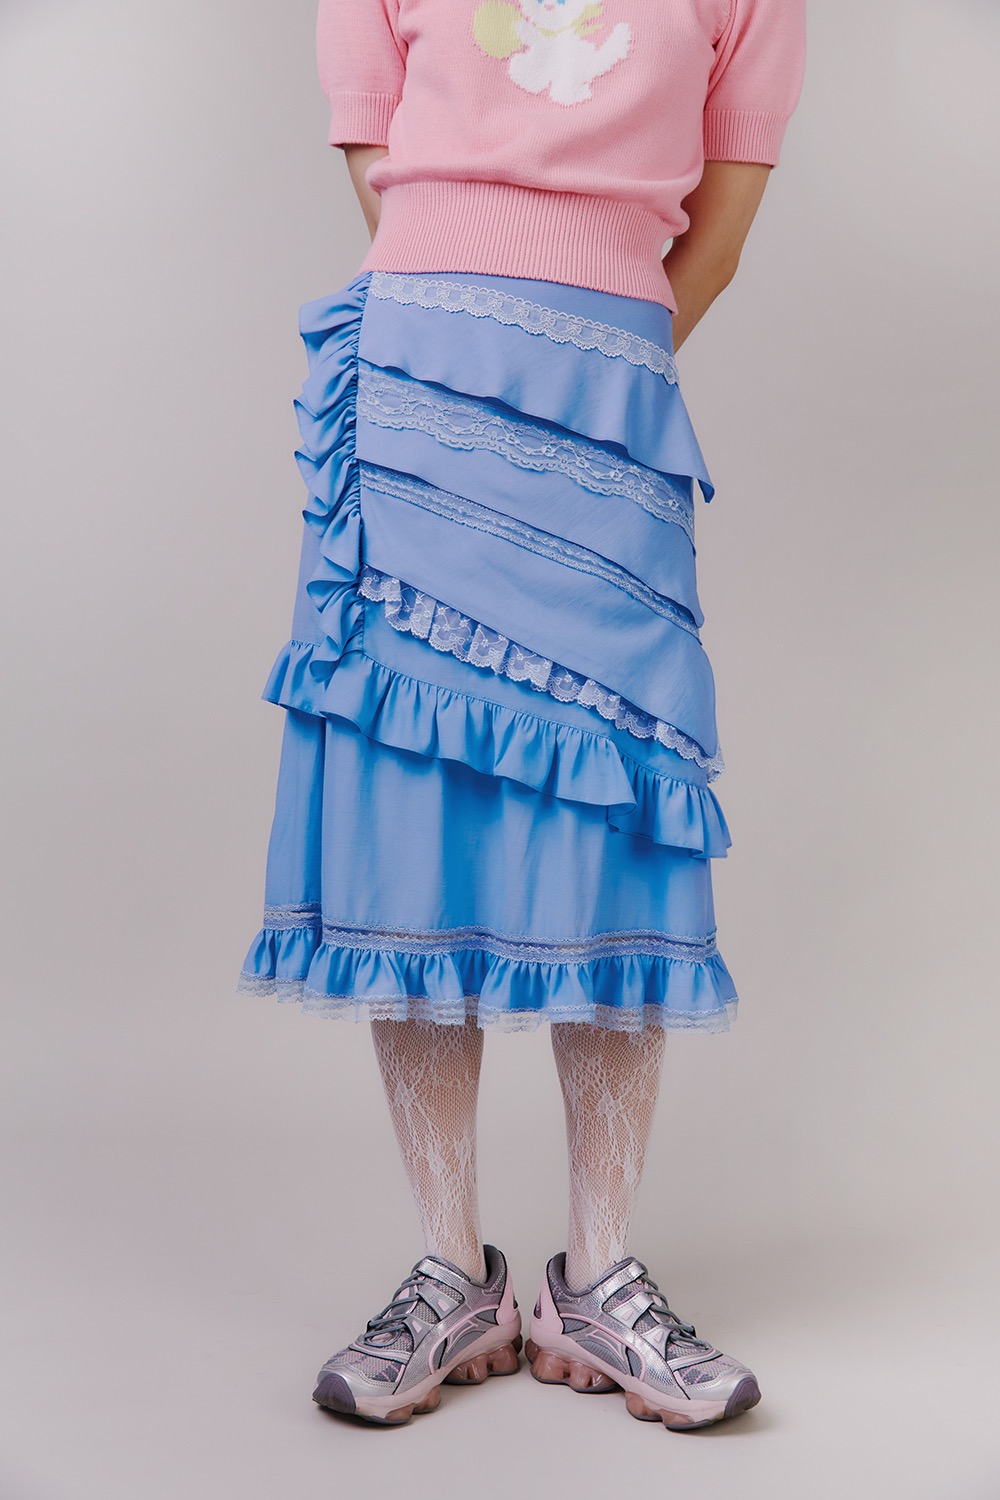 Bella Lace Skirt (Blue) / 5월22일 예약배송